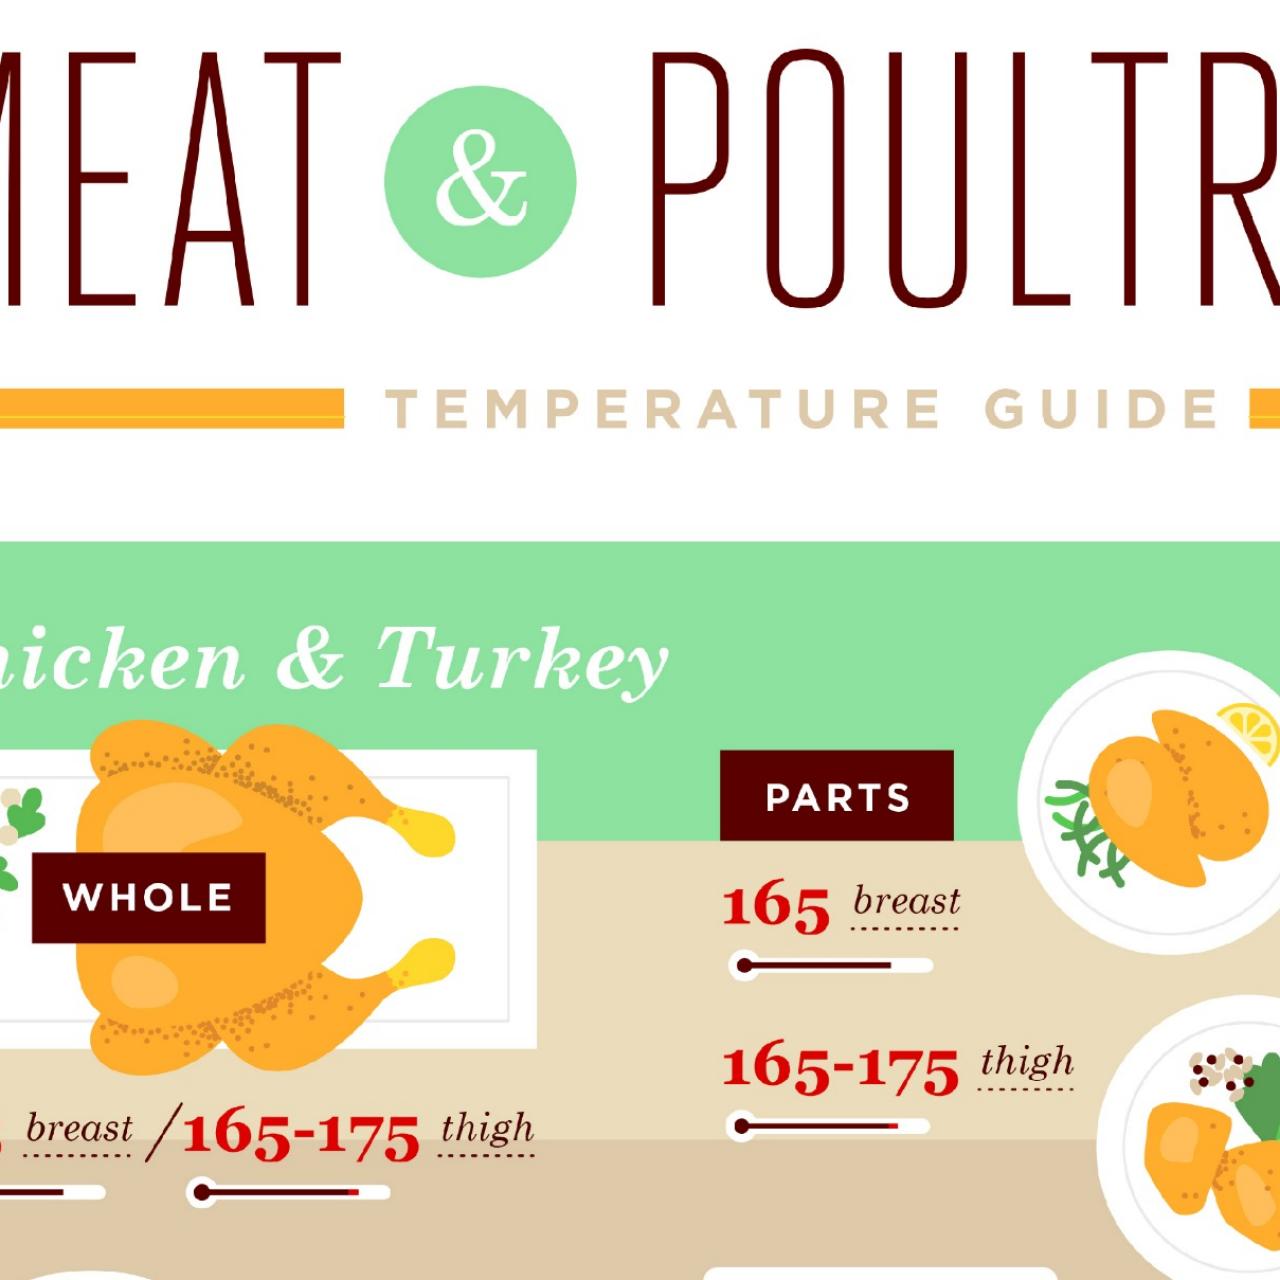 Safe Internal Temperatures for Meat - Traeger Grills